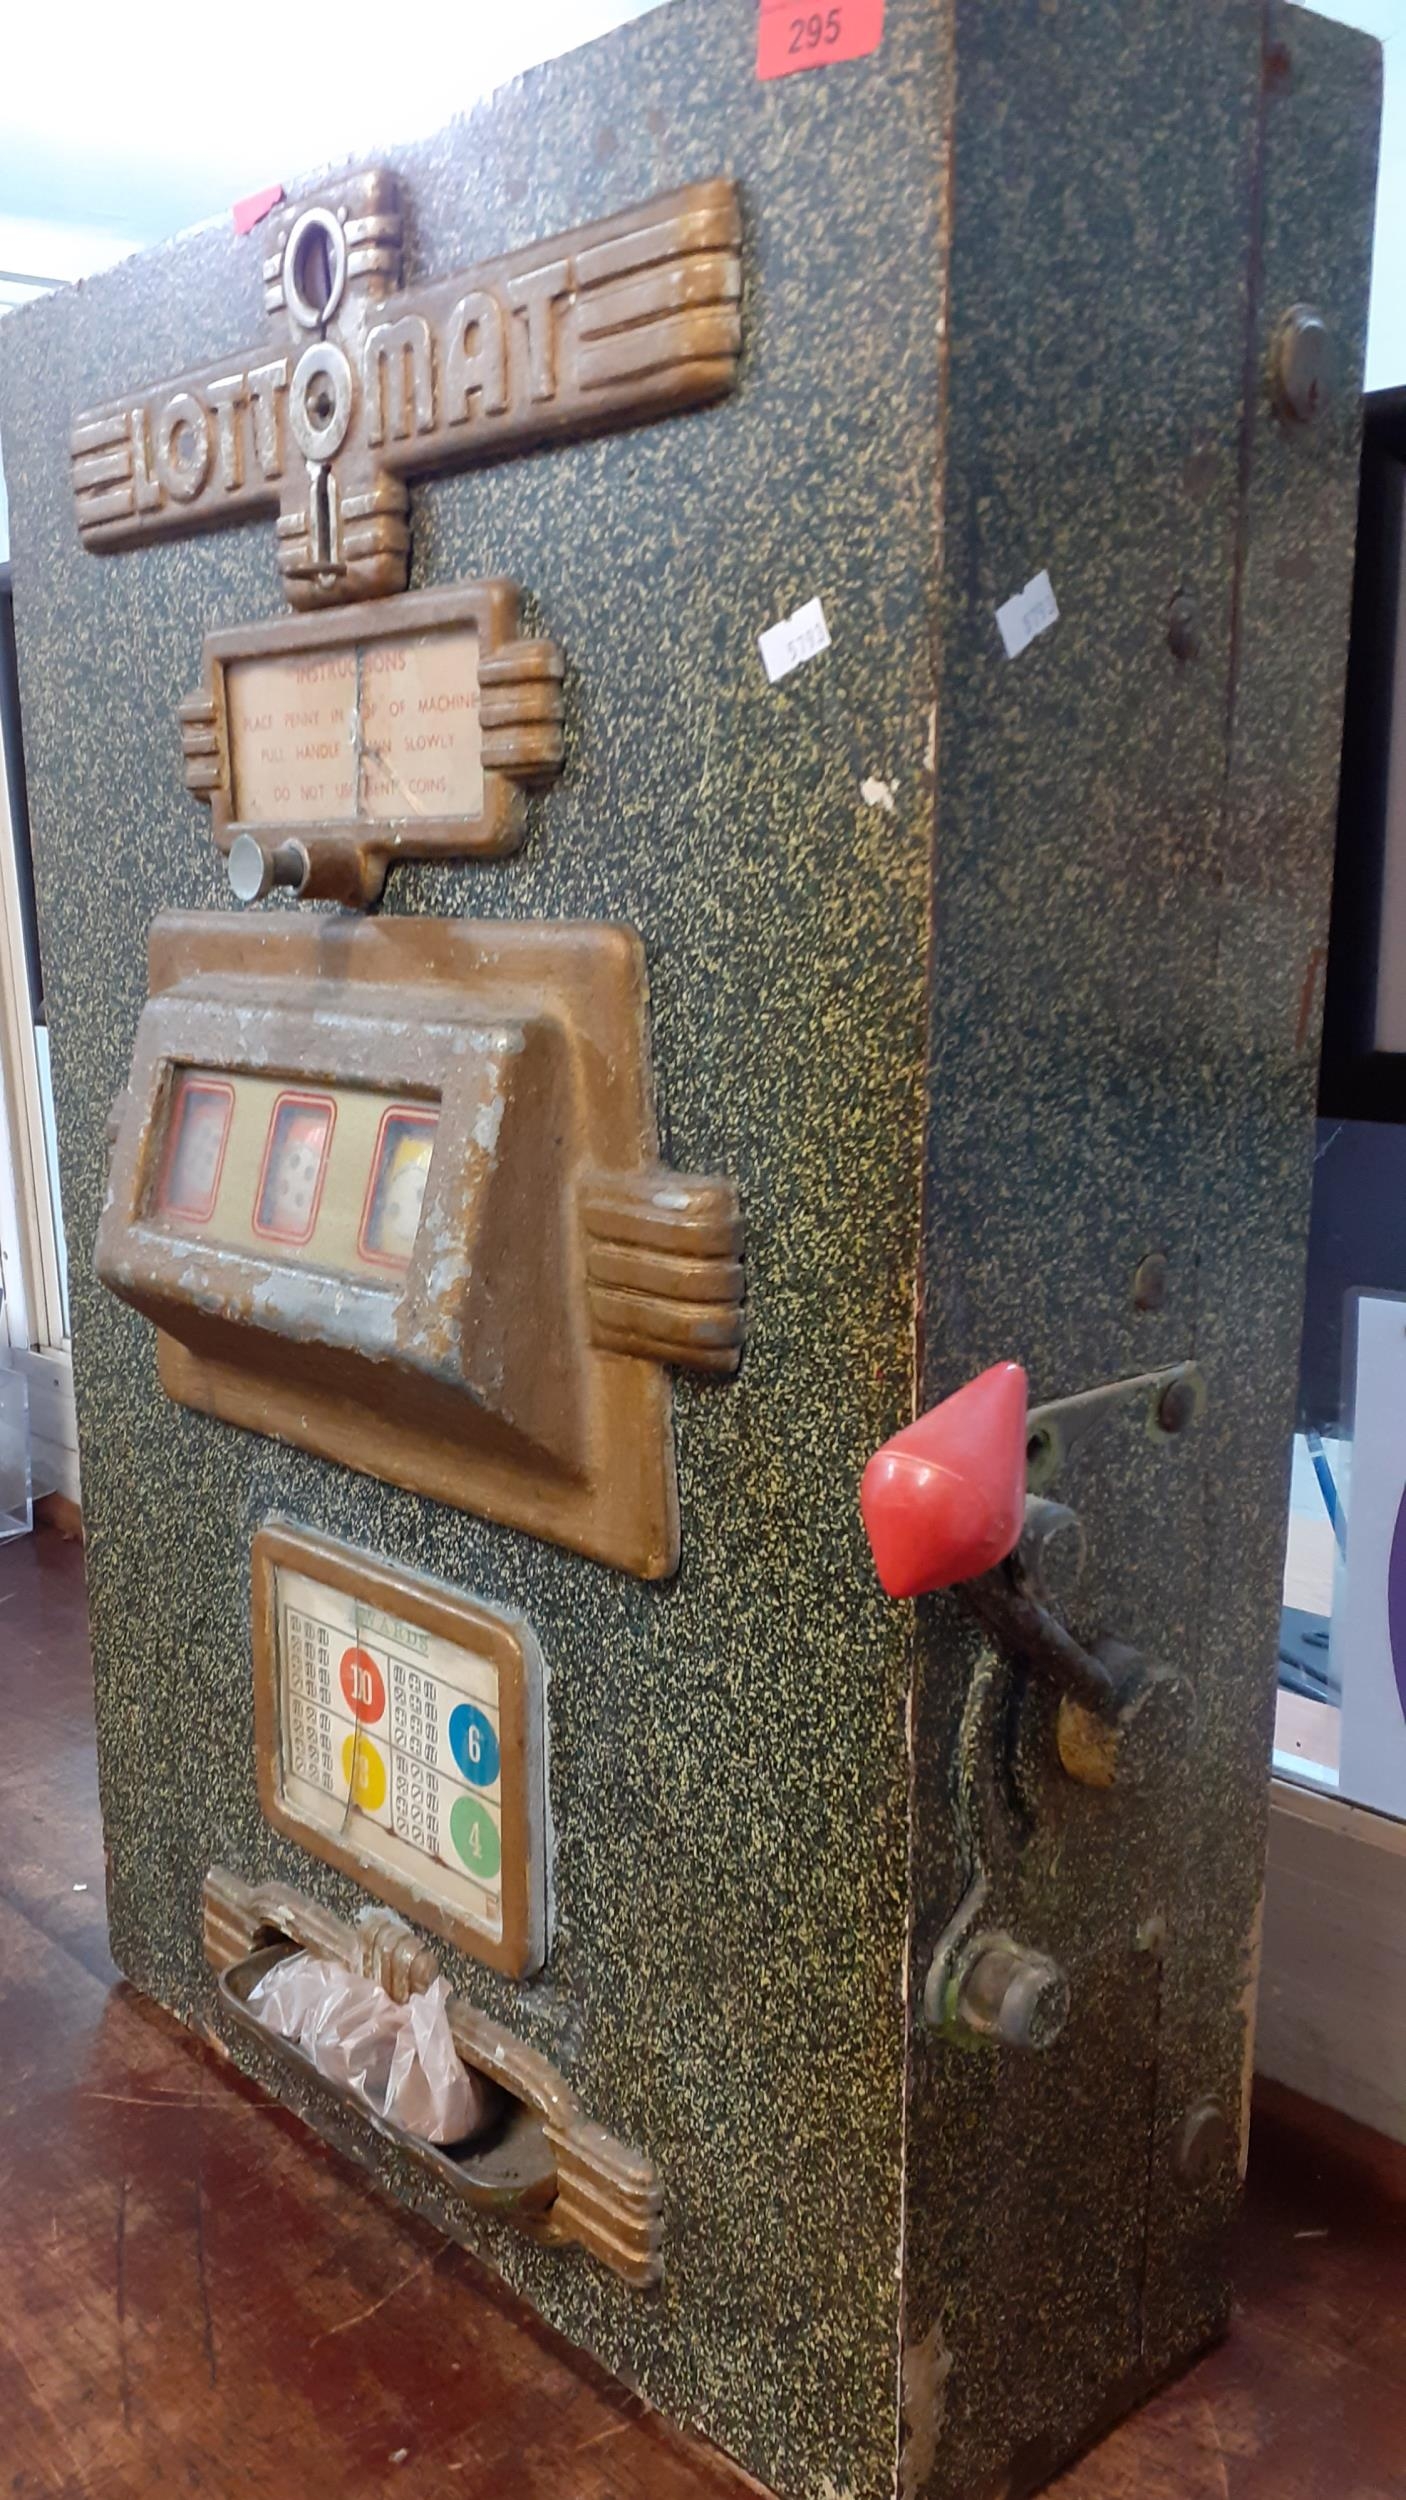 A Lottmate penny slot machine A/F Location: Foyer - Image 2 of 4